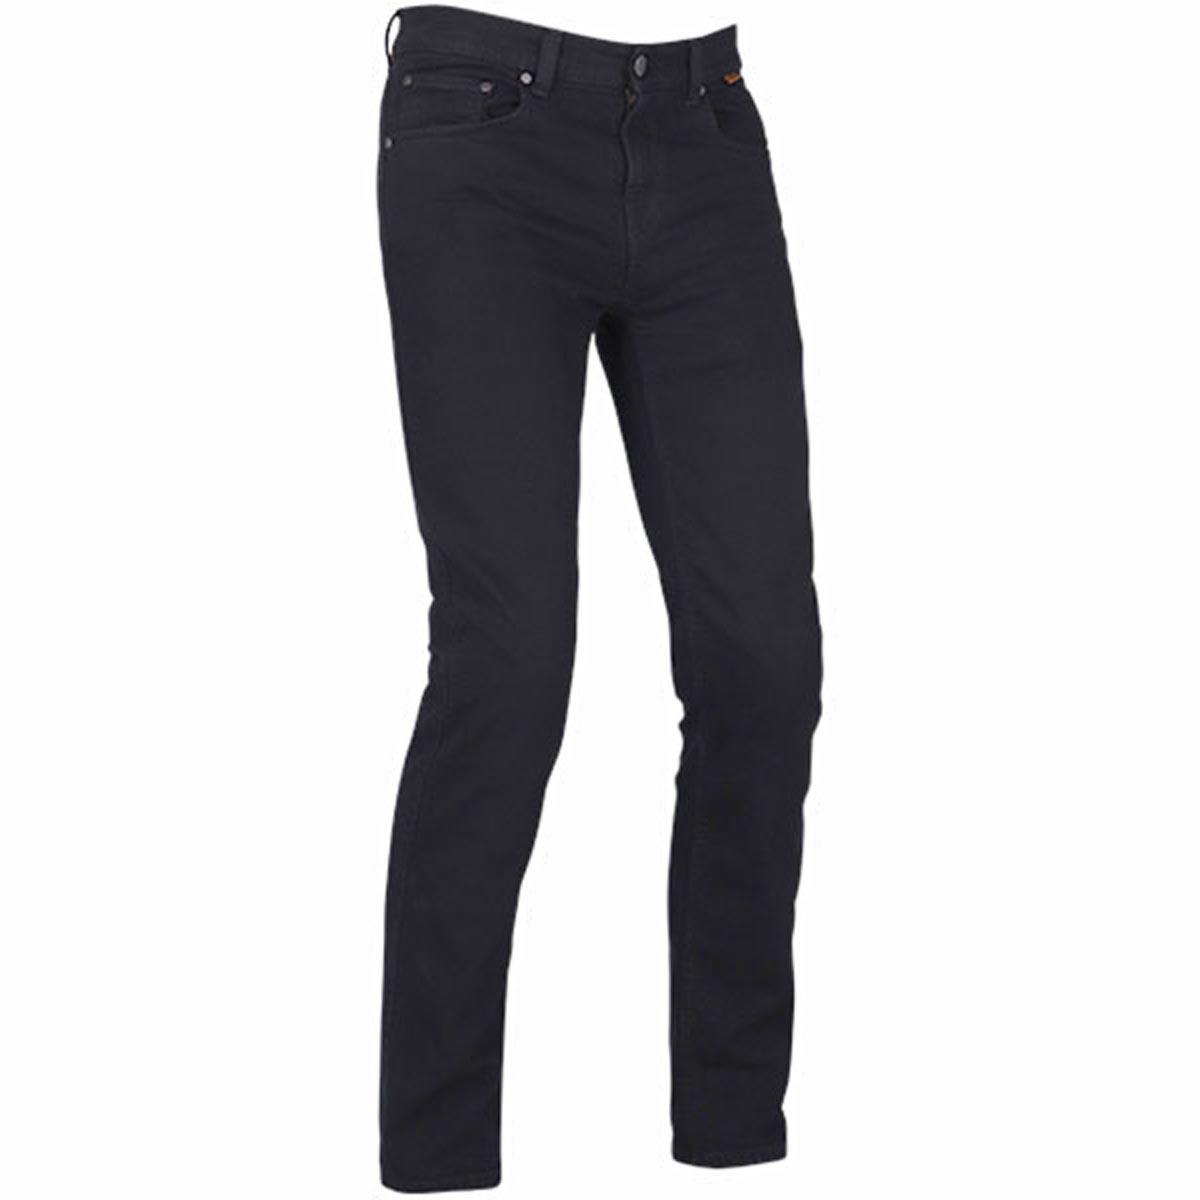 Richa Original 2 Straight Cut Jeans Black 30in Leg 44in Waist